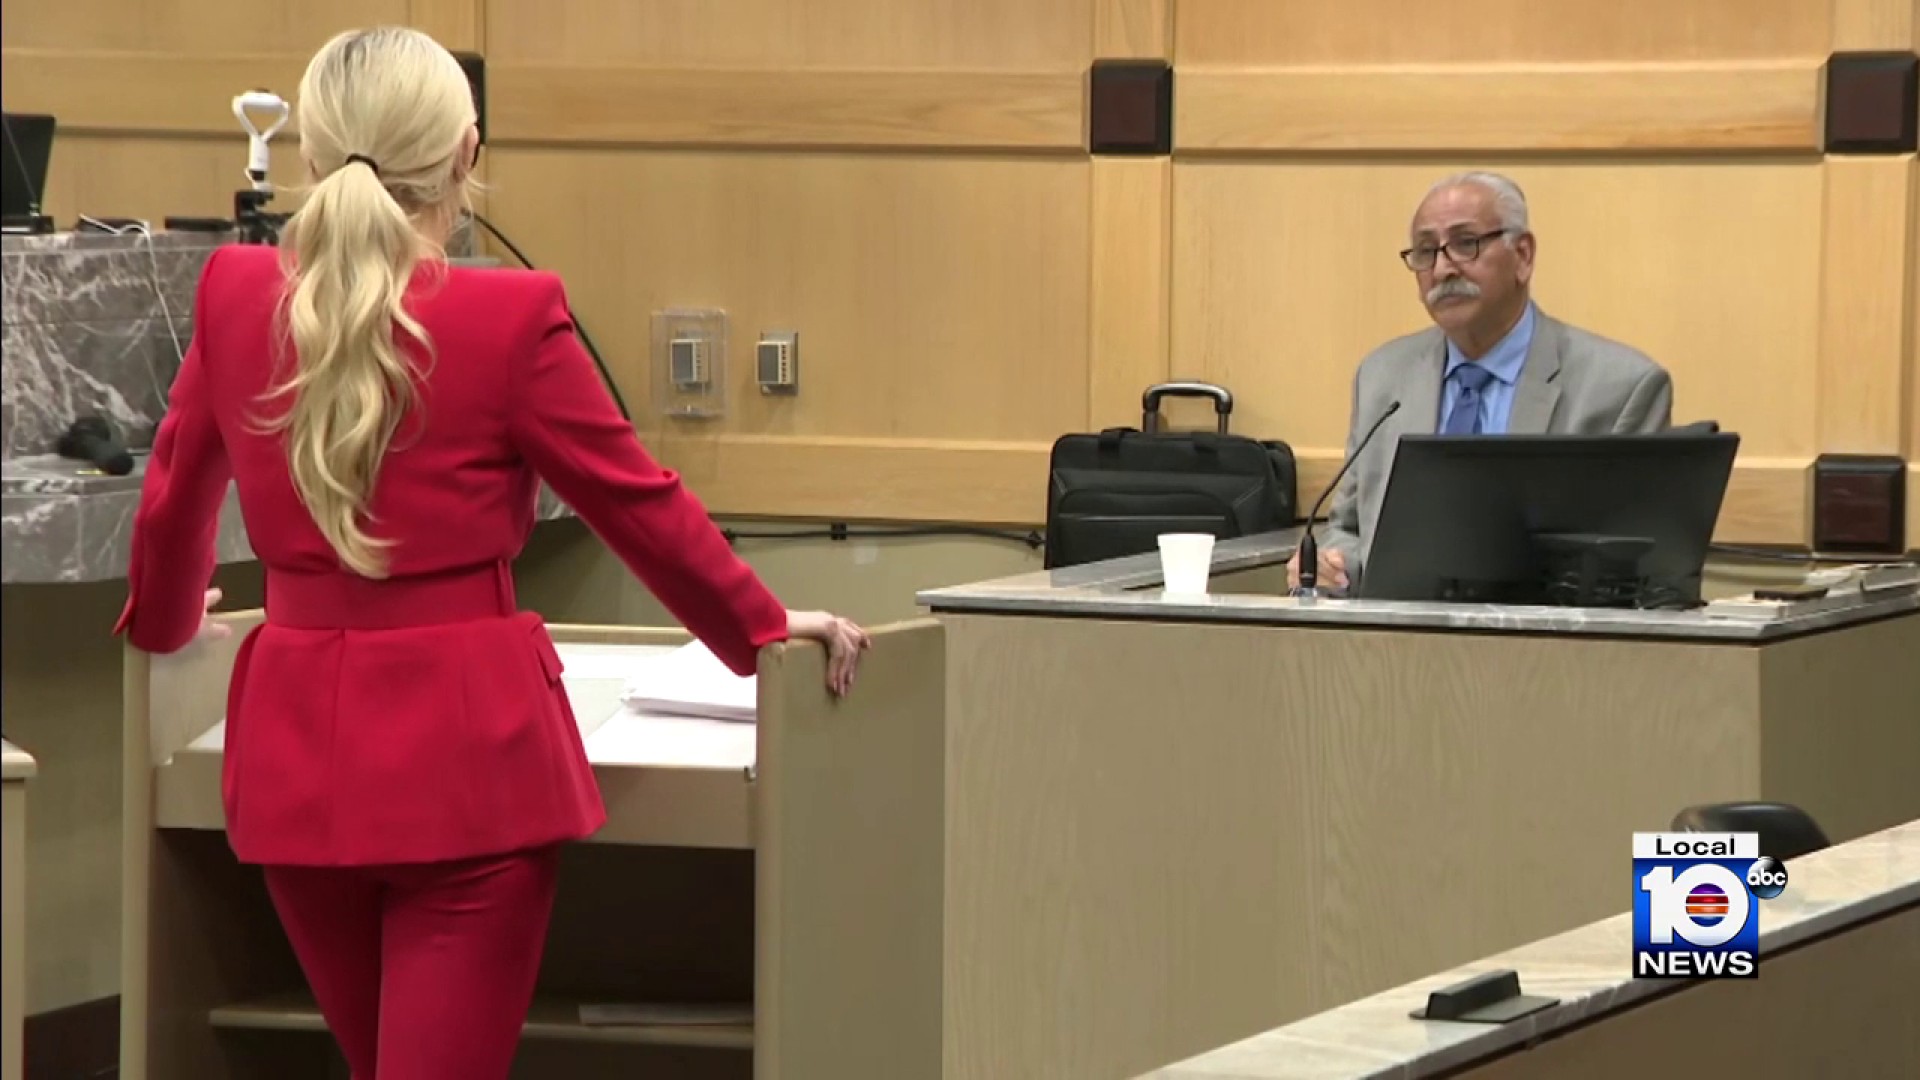 Wwwxxxvideohd Video - XXXTentacion murder: Here is what defense's gang expert wants to tell jury